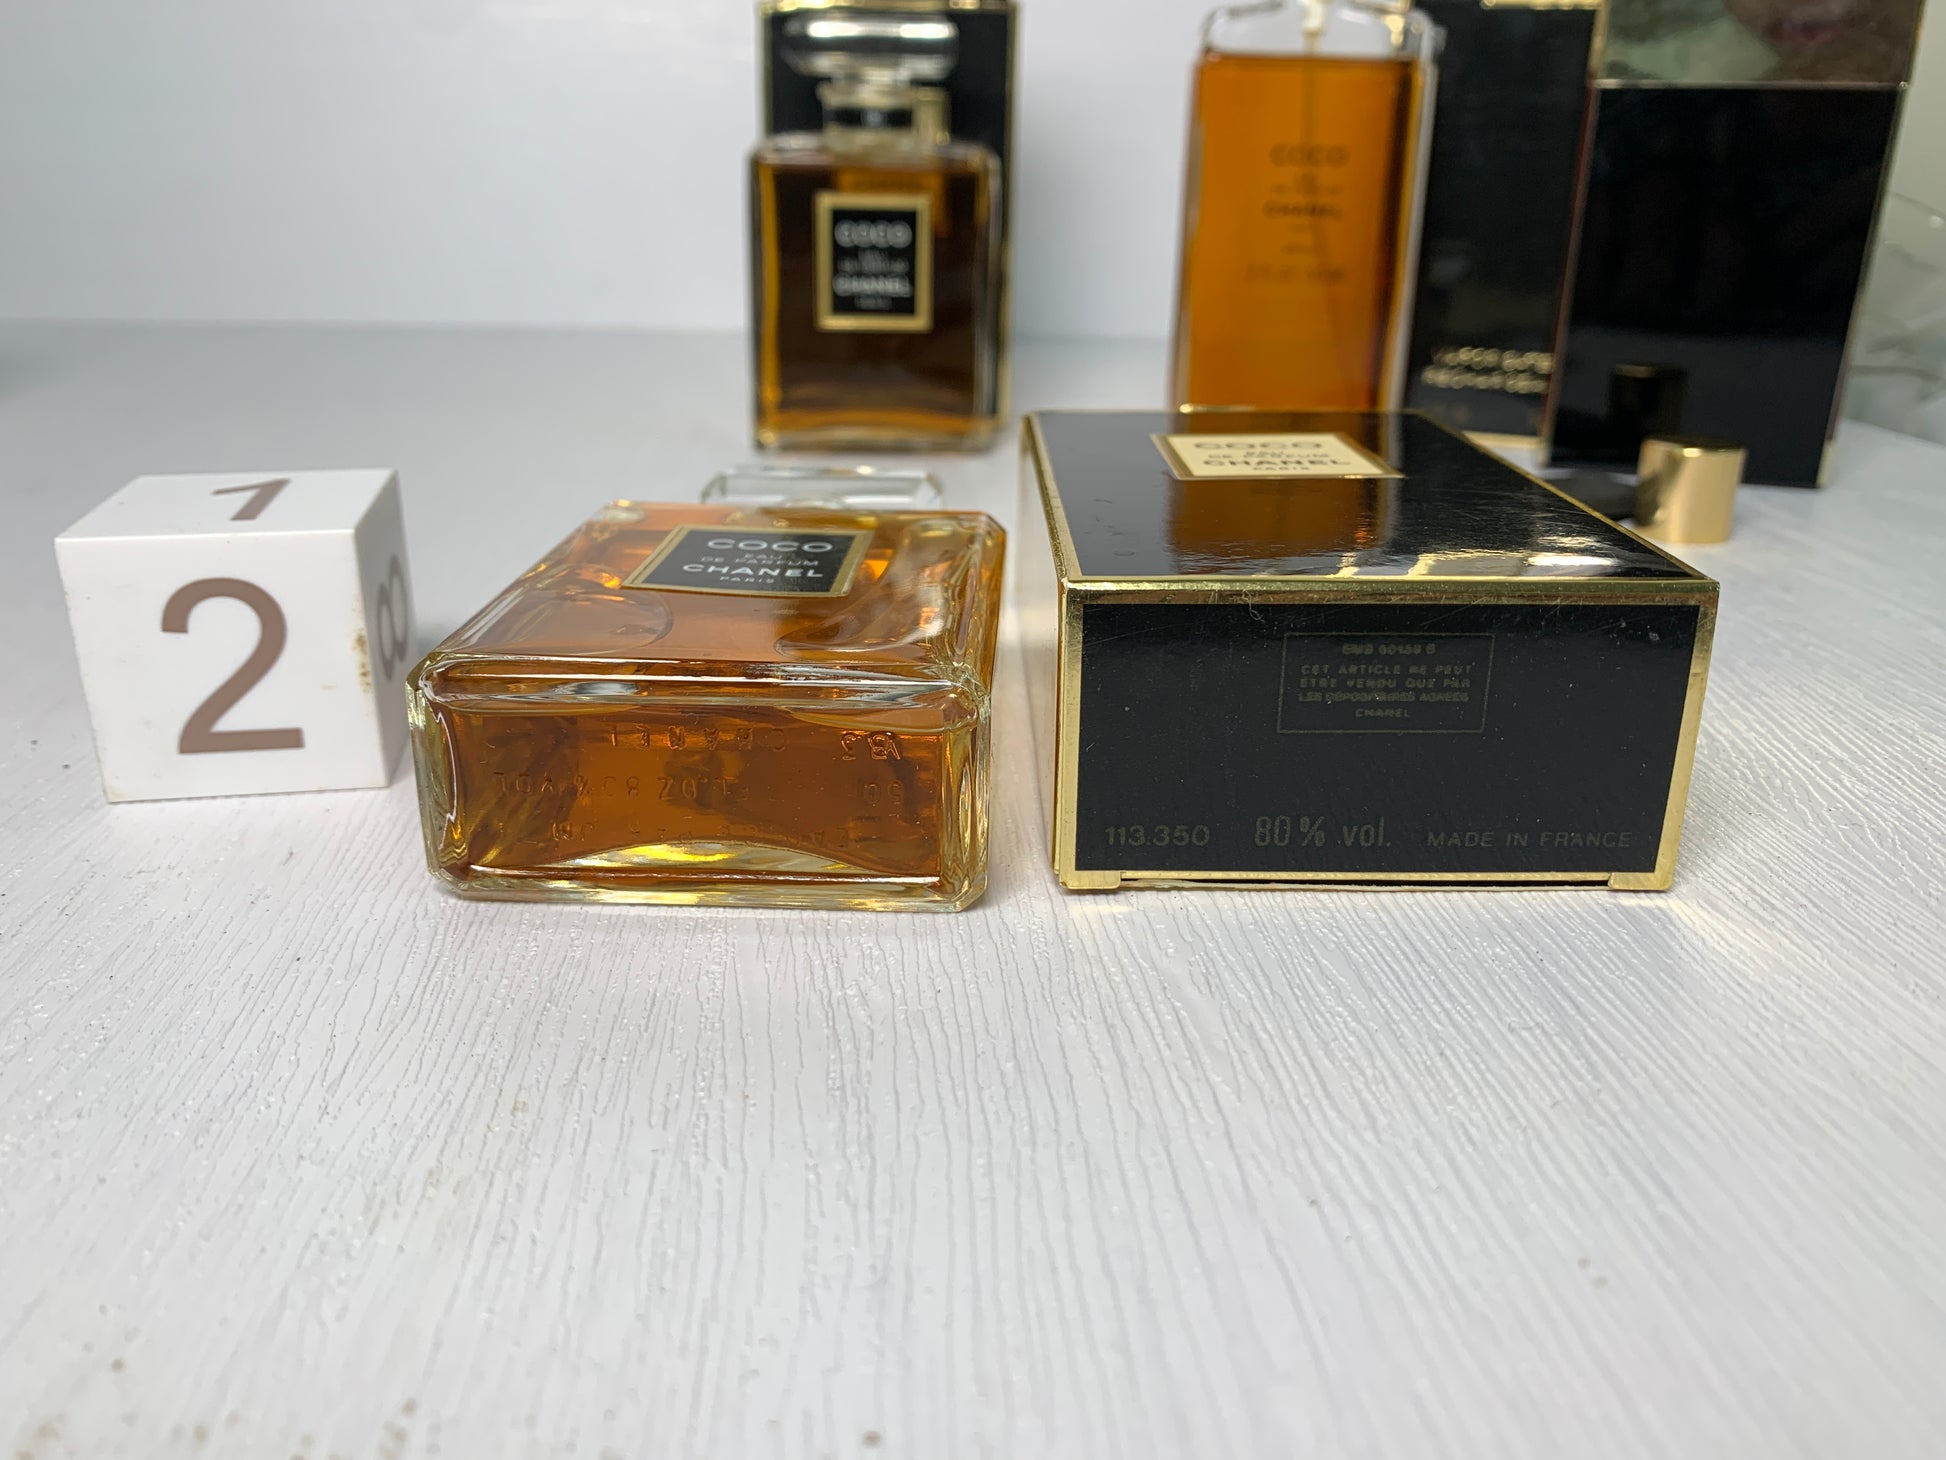 Rare Chanel Coco parfum perfume 7ml 1/4 oz - 010523-48 – Trendy Ground